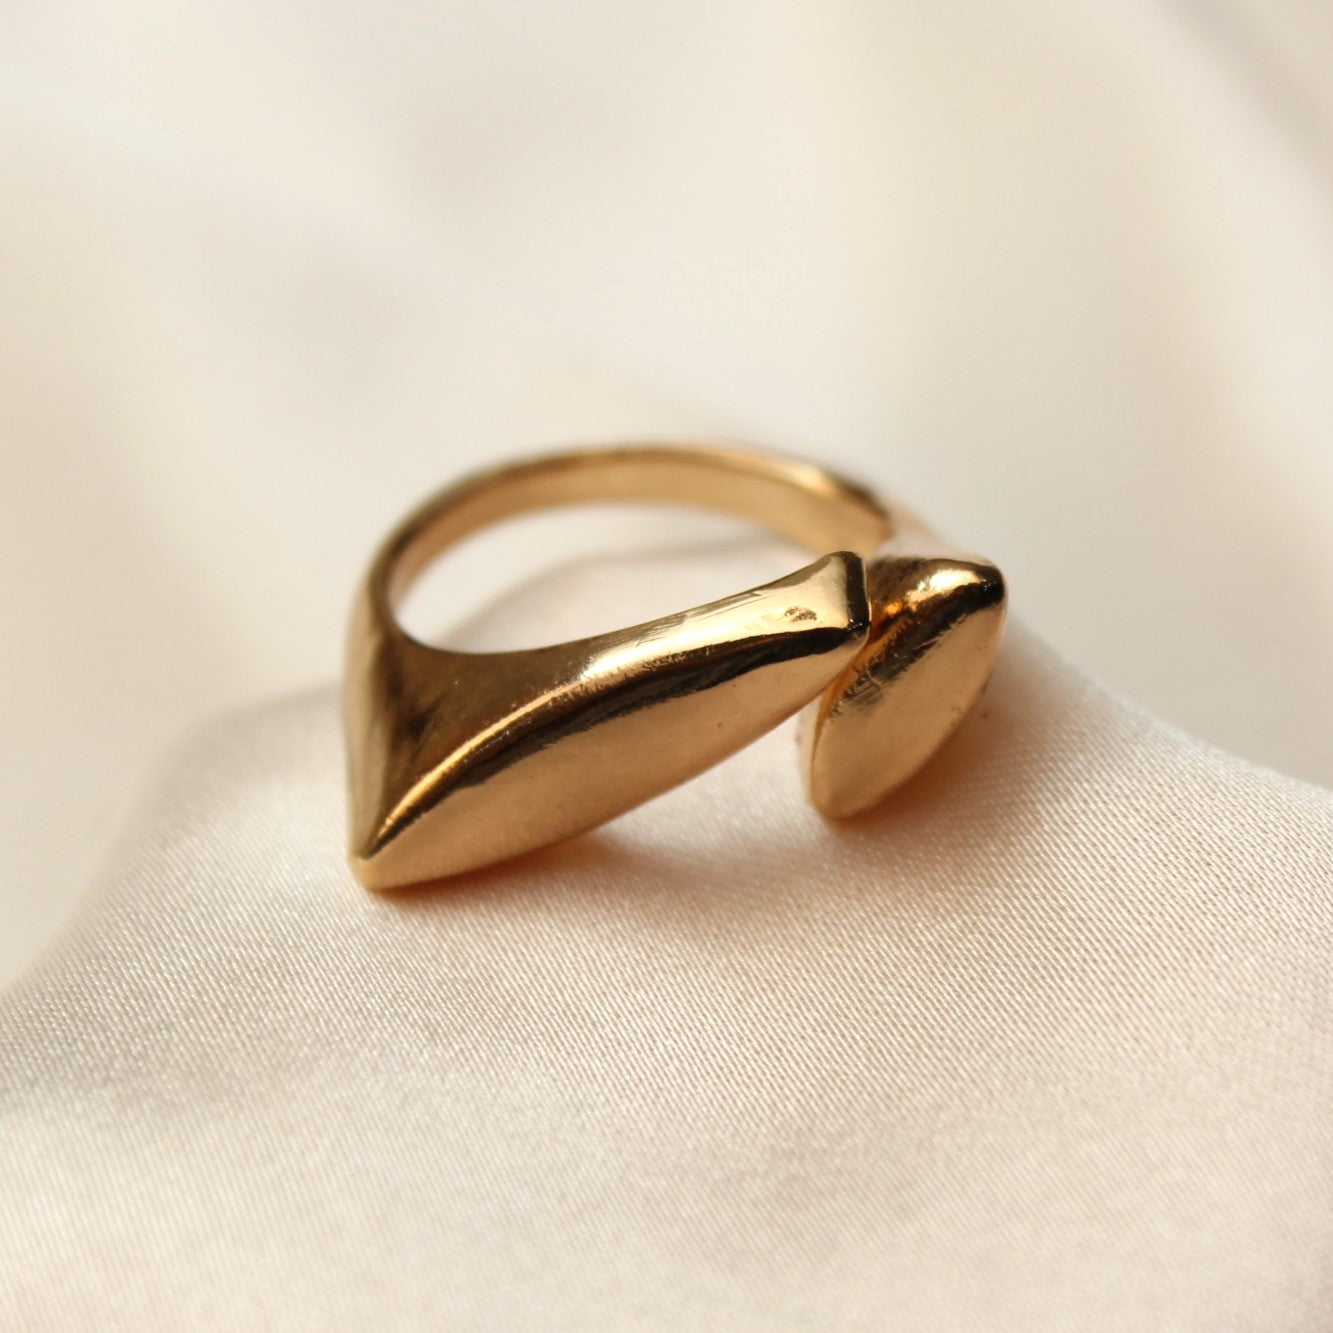 TFC 24K Sleek Edgy Gold Plated Adjustable Ring